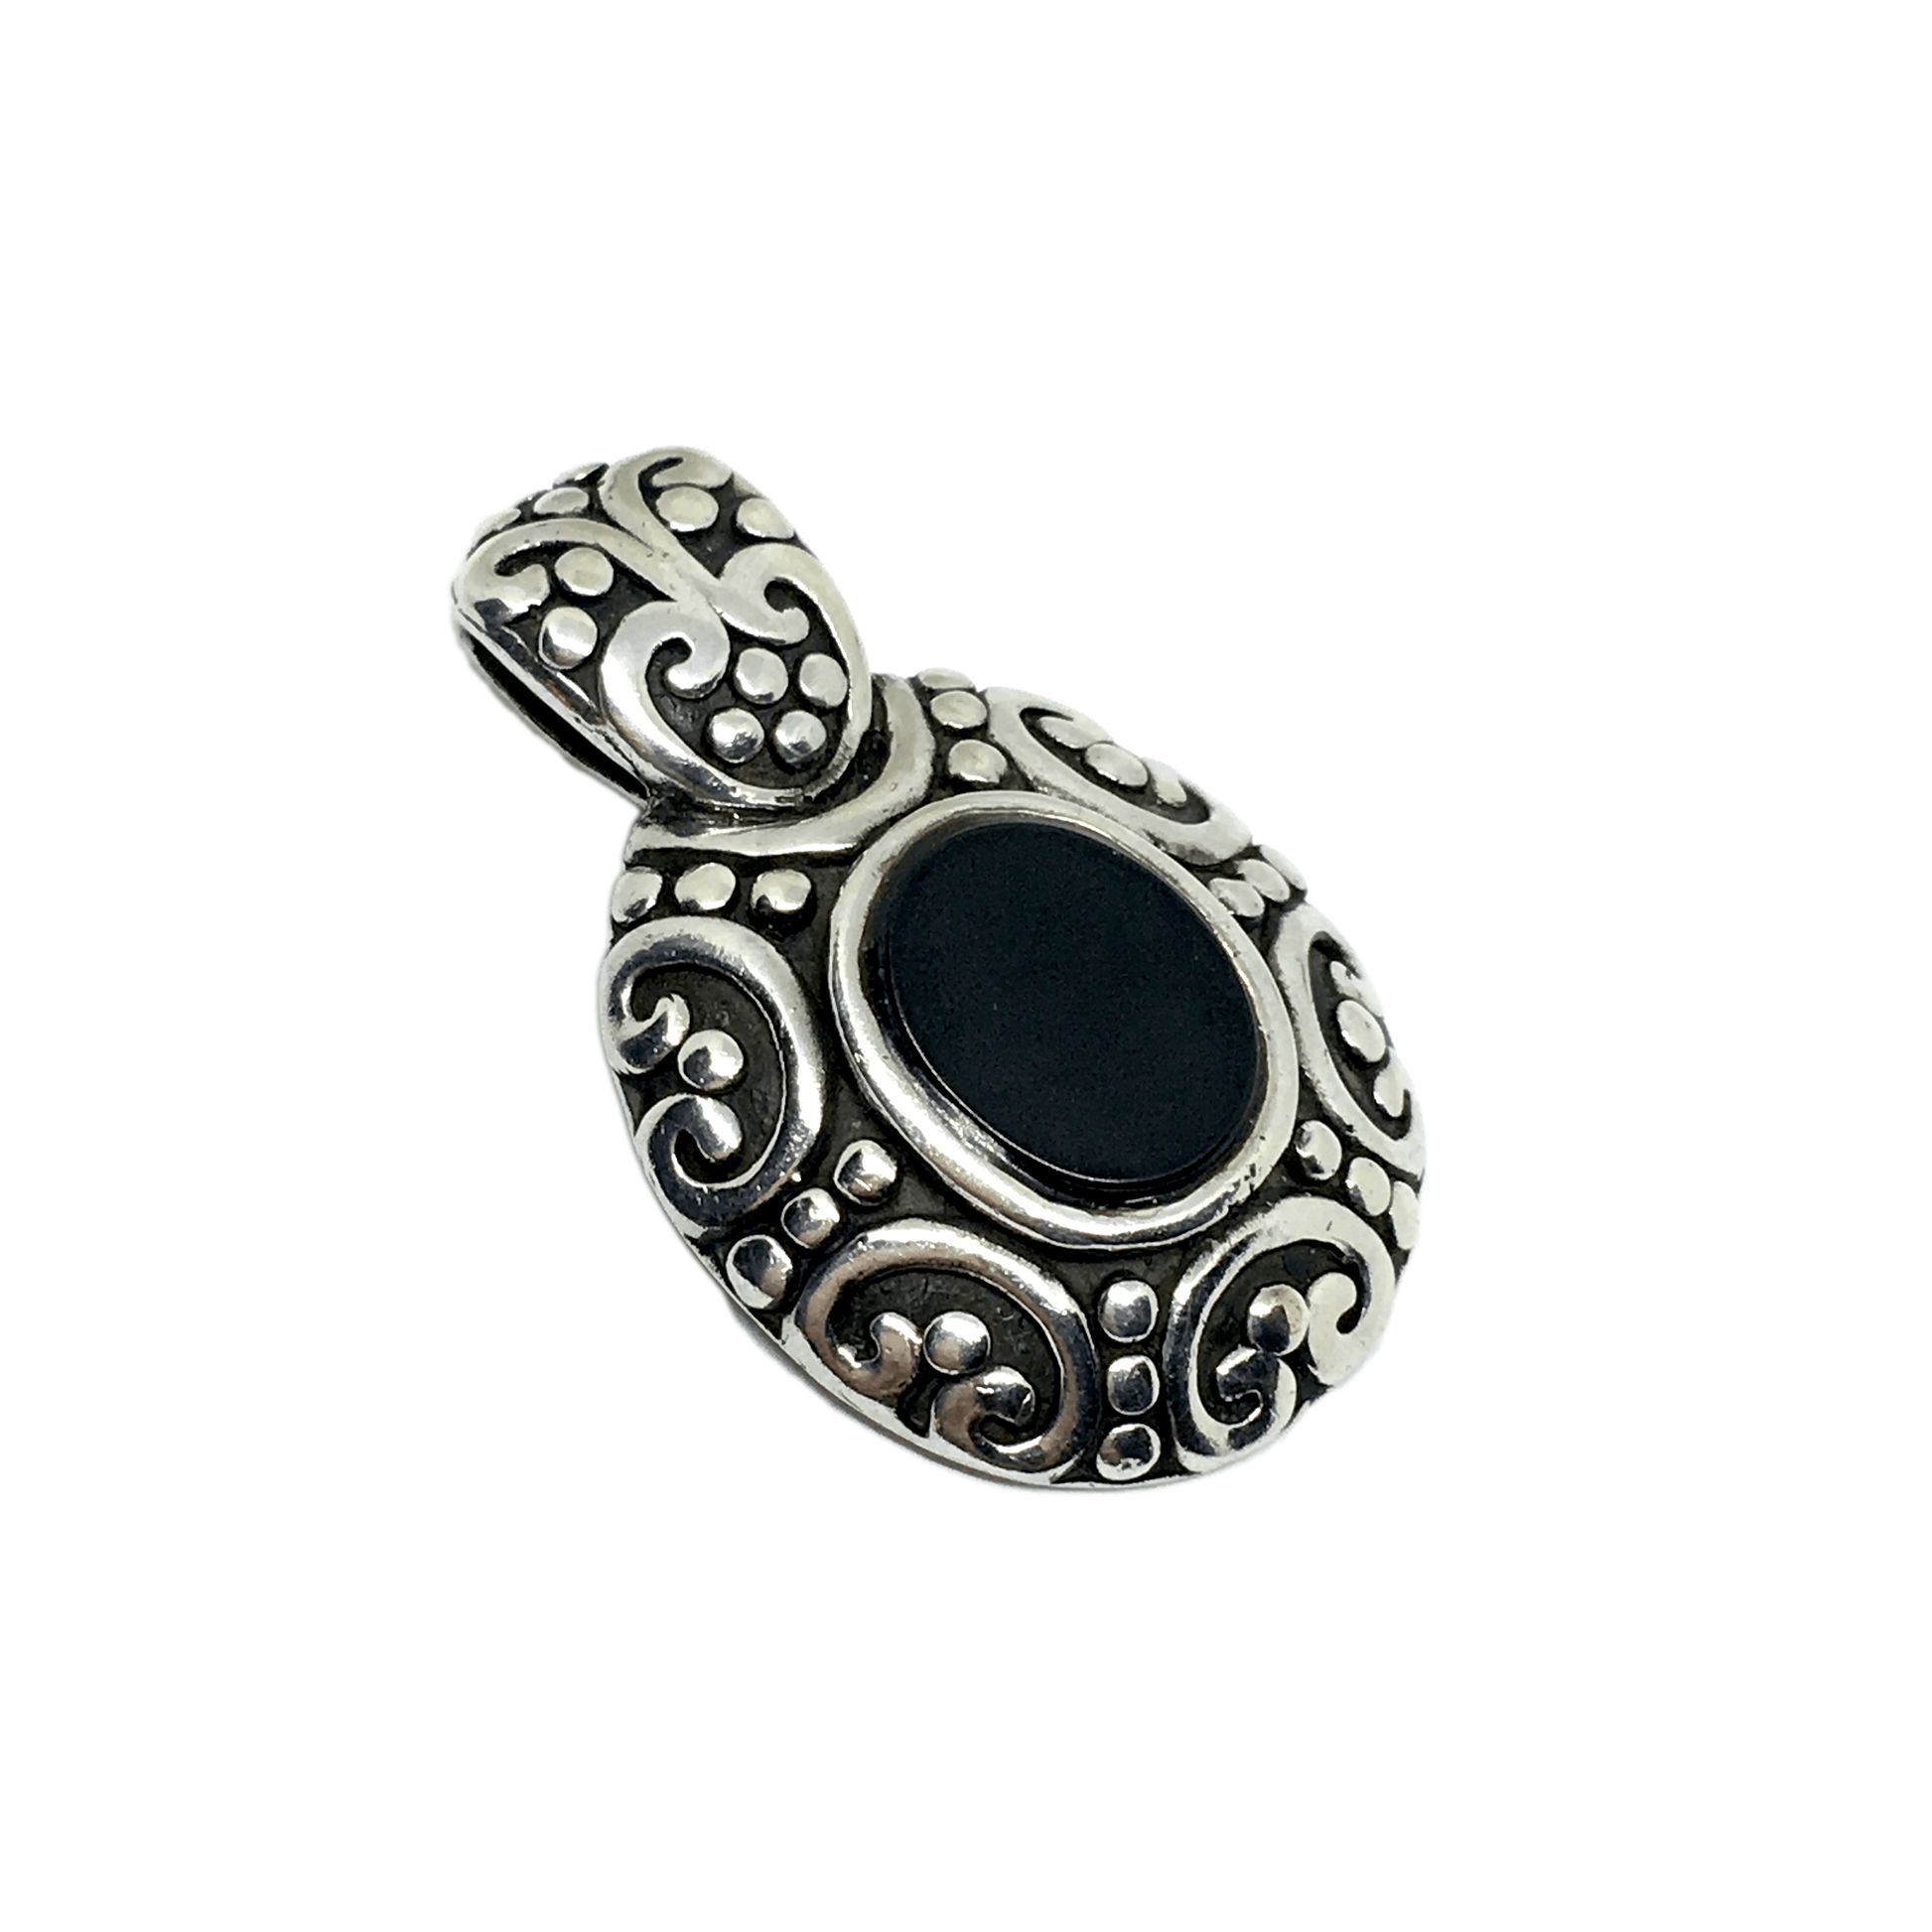 Pendant - Mens Womens Sterling Silver Pendant - Jet Black Dark Pool Design Pendant - Oval Stone Necklace Pendant